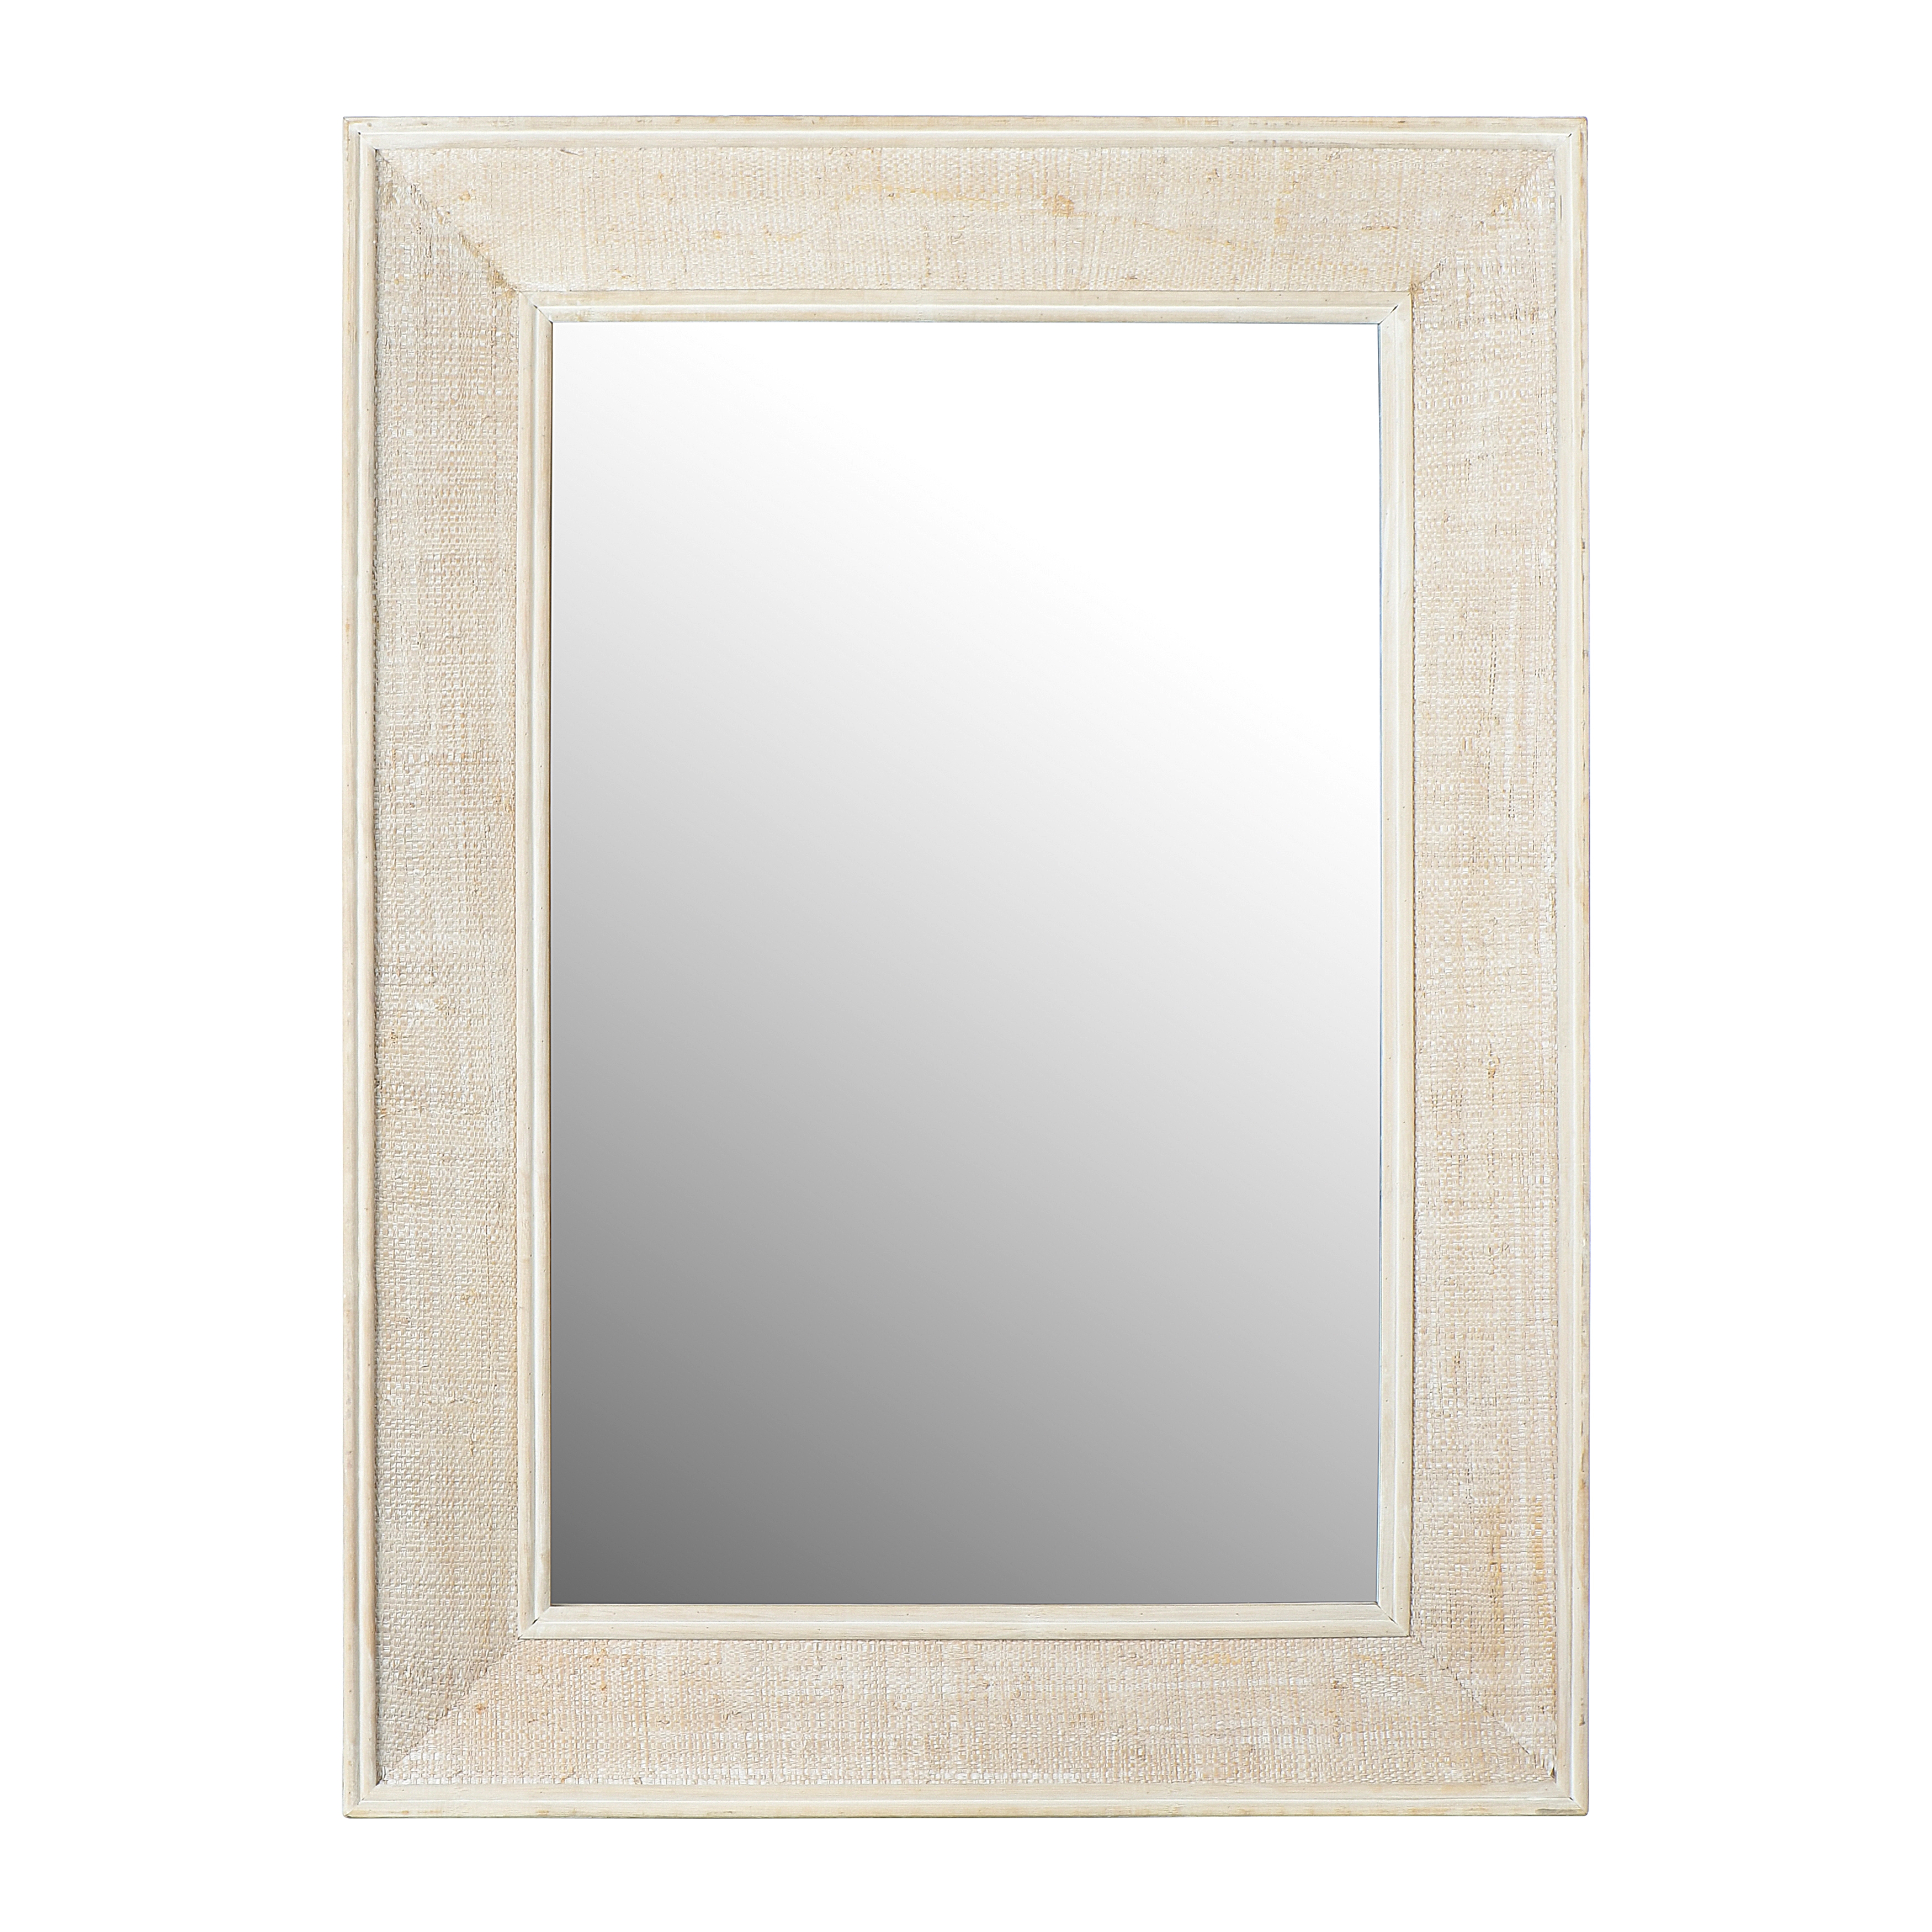 Ciara Rattan Wall Mirror, Whitewash - Image 0